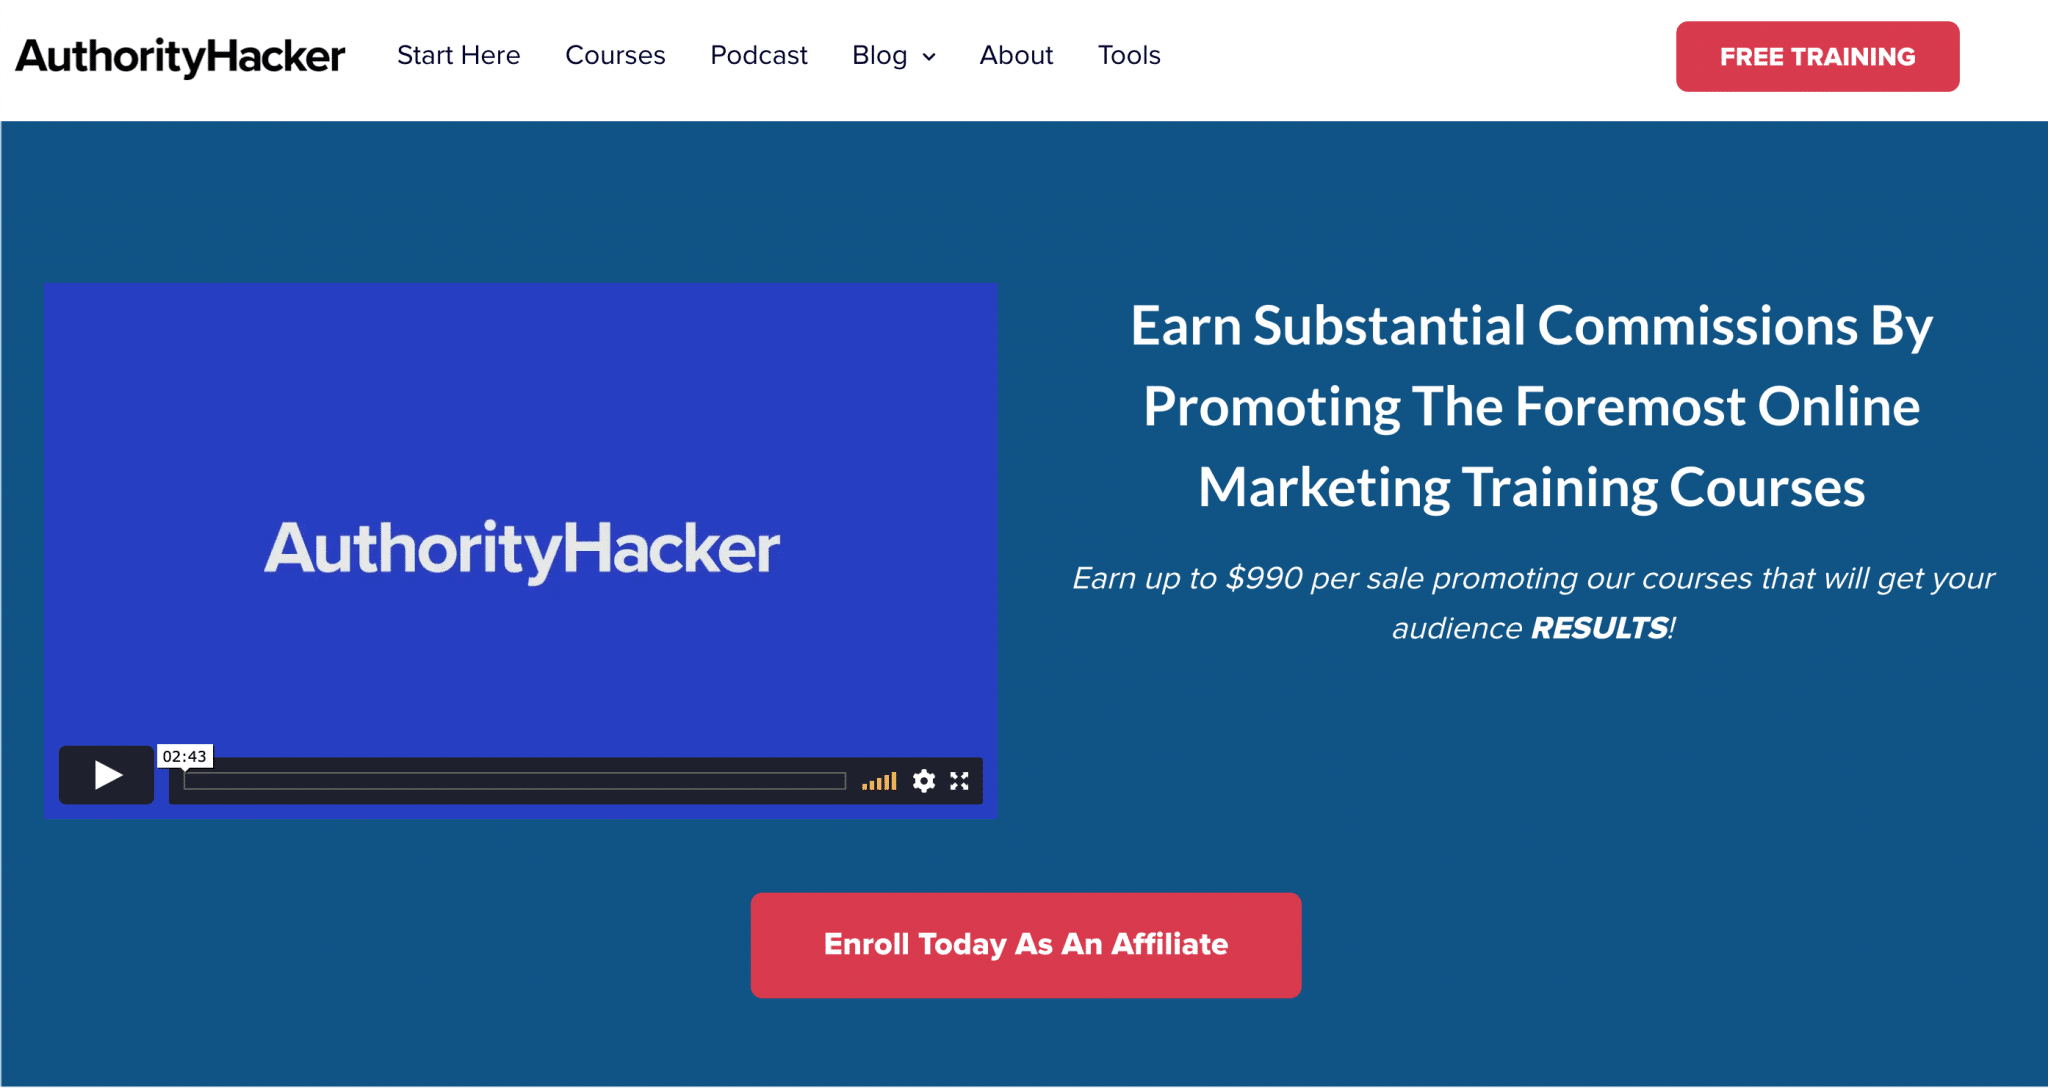 AuthorityHacker - affiliate program 